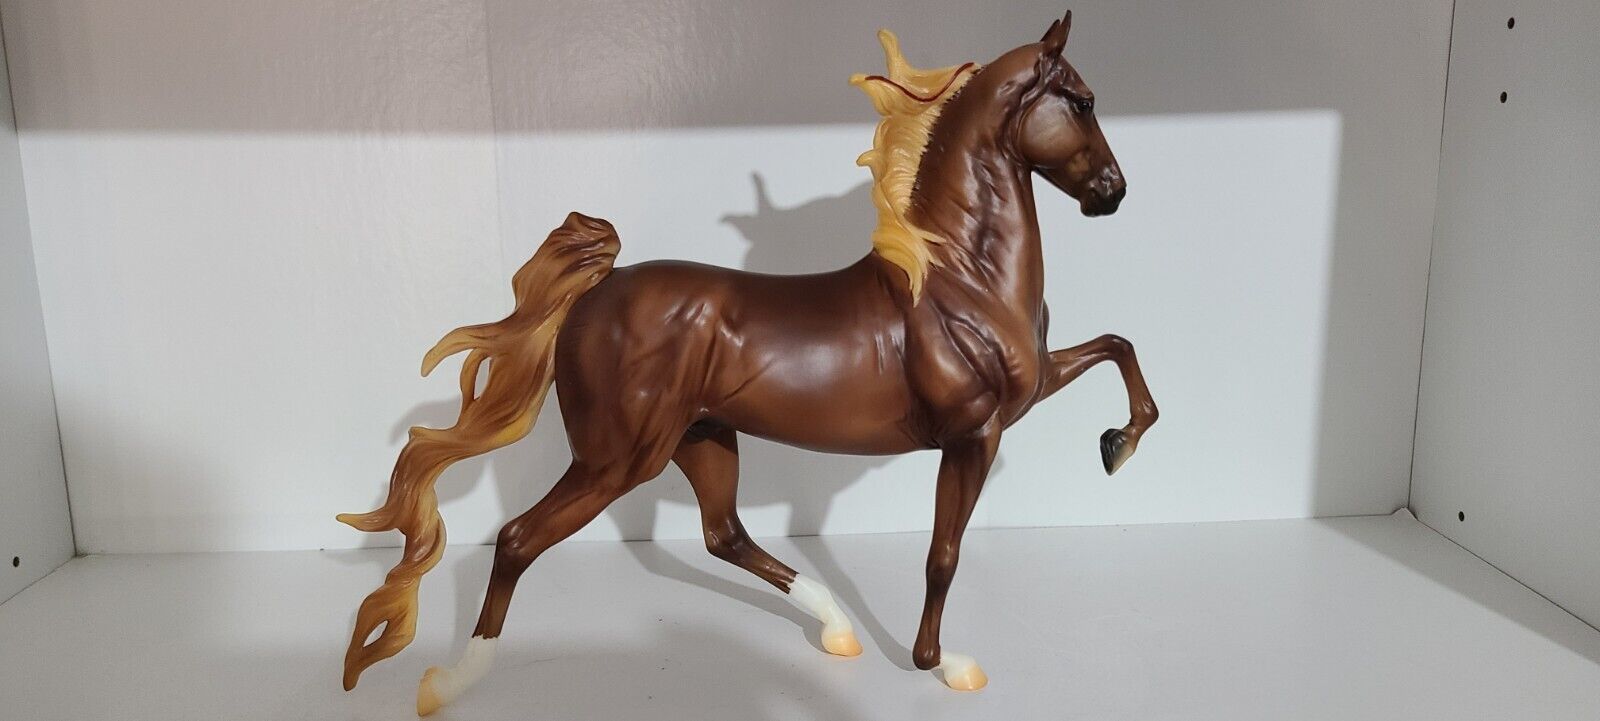 Breyer WGC Marc of Charm #1847 American Saddlebred Stallion 